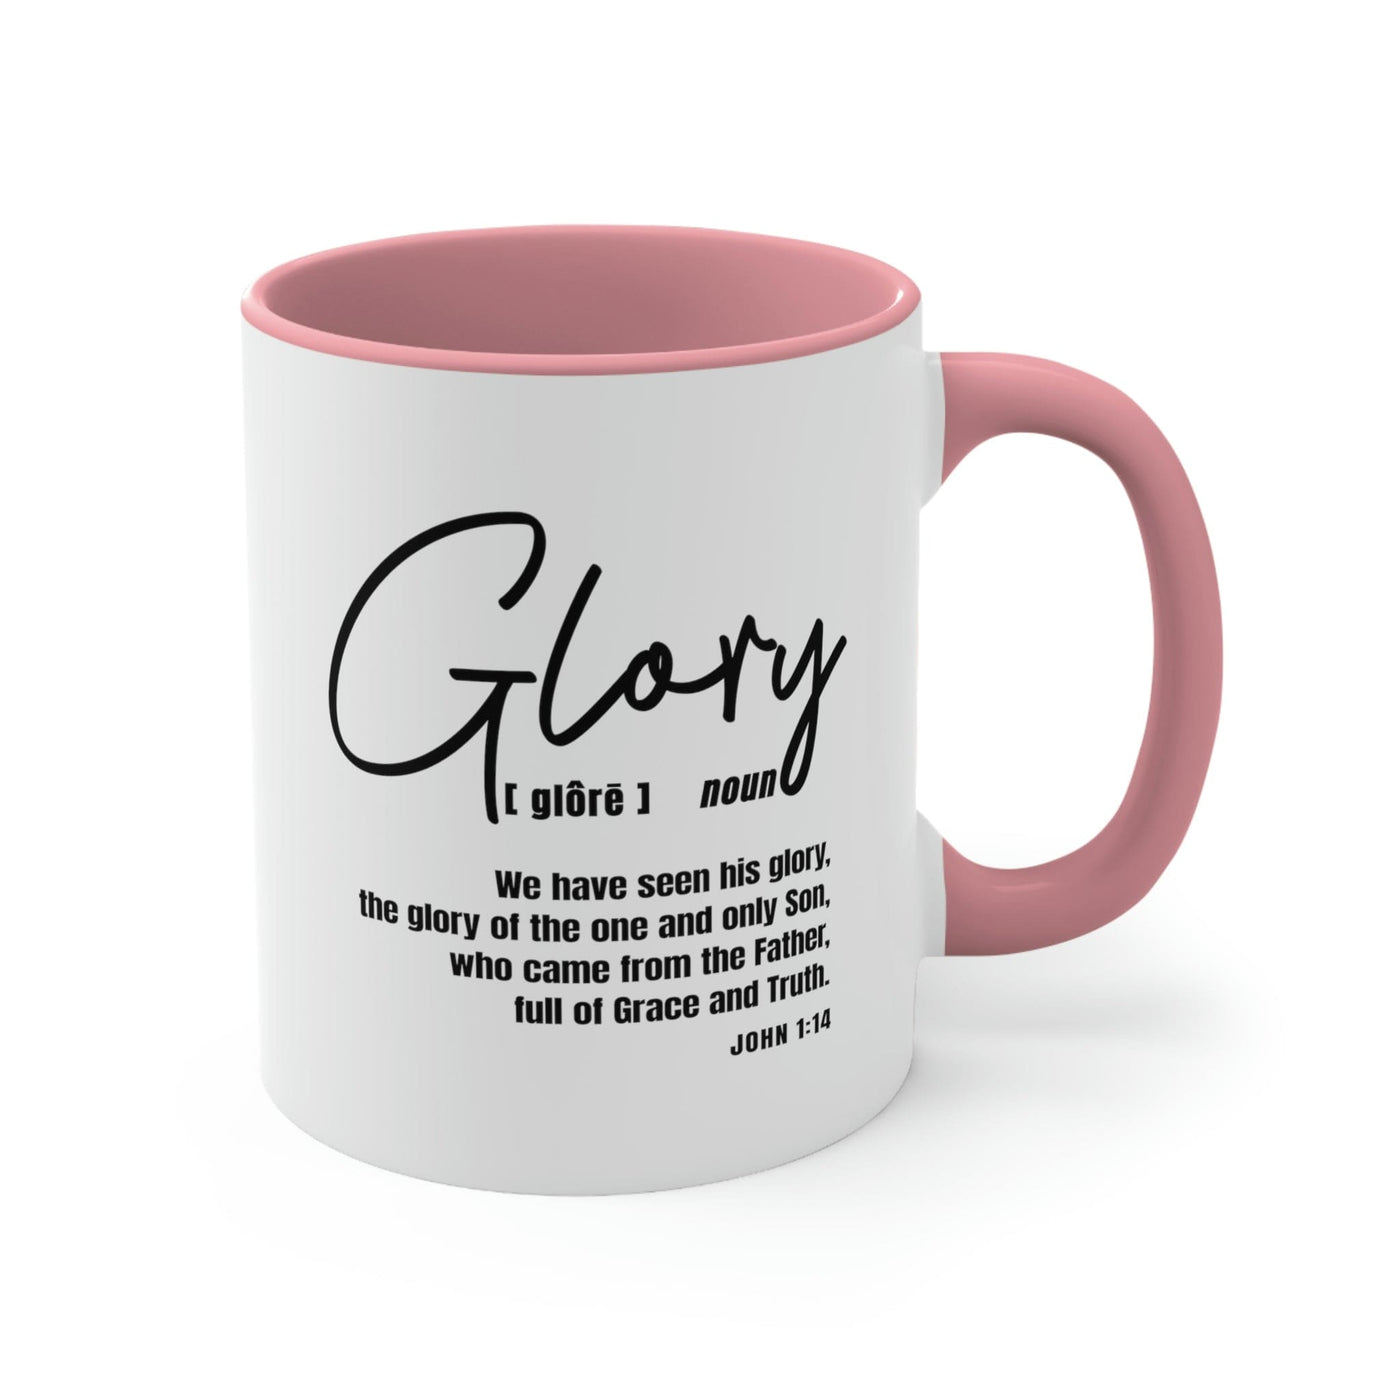 Two - tone Accent Ceramic Mug 11oz Glory Christian Inspiration Black